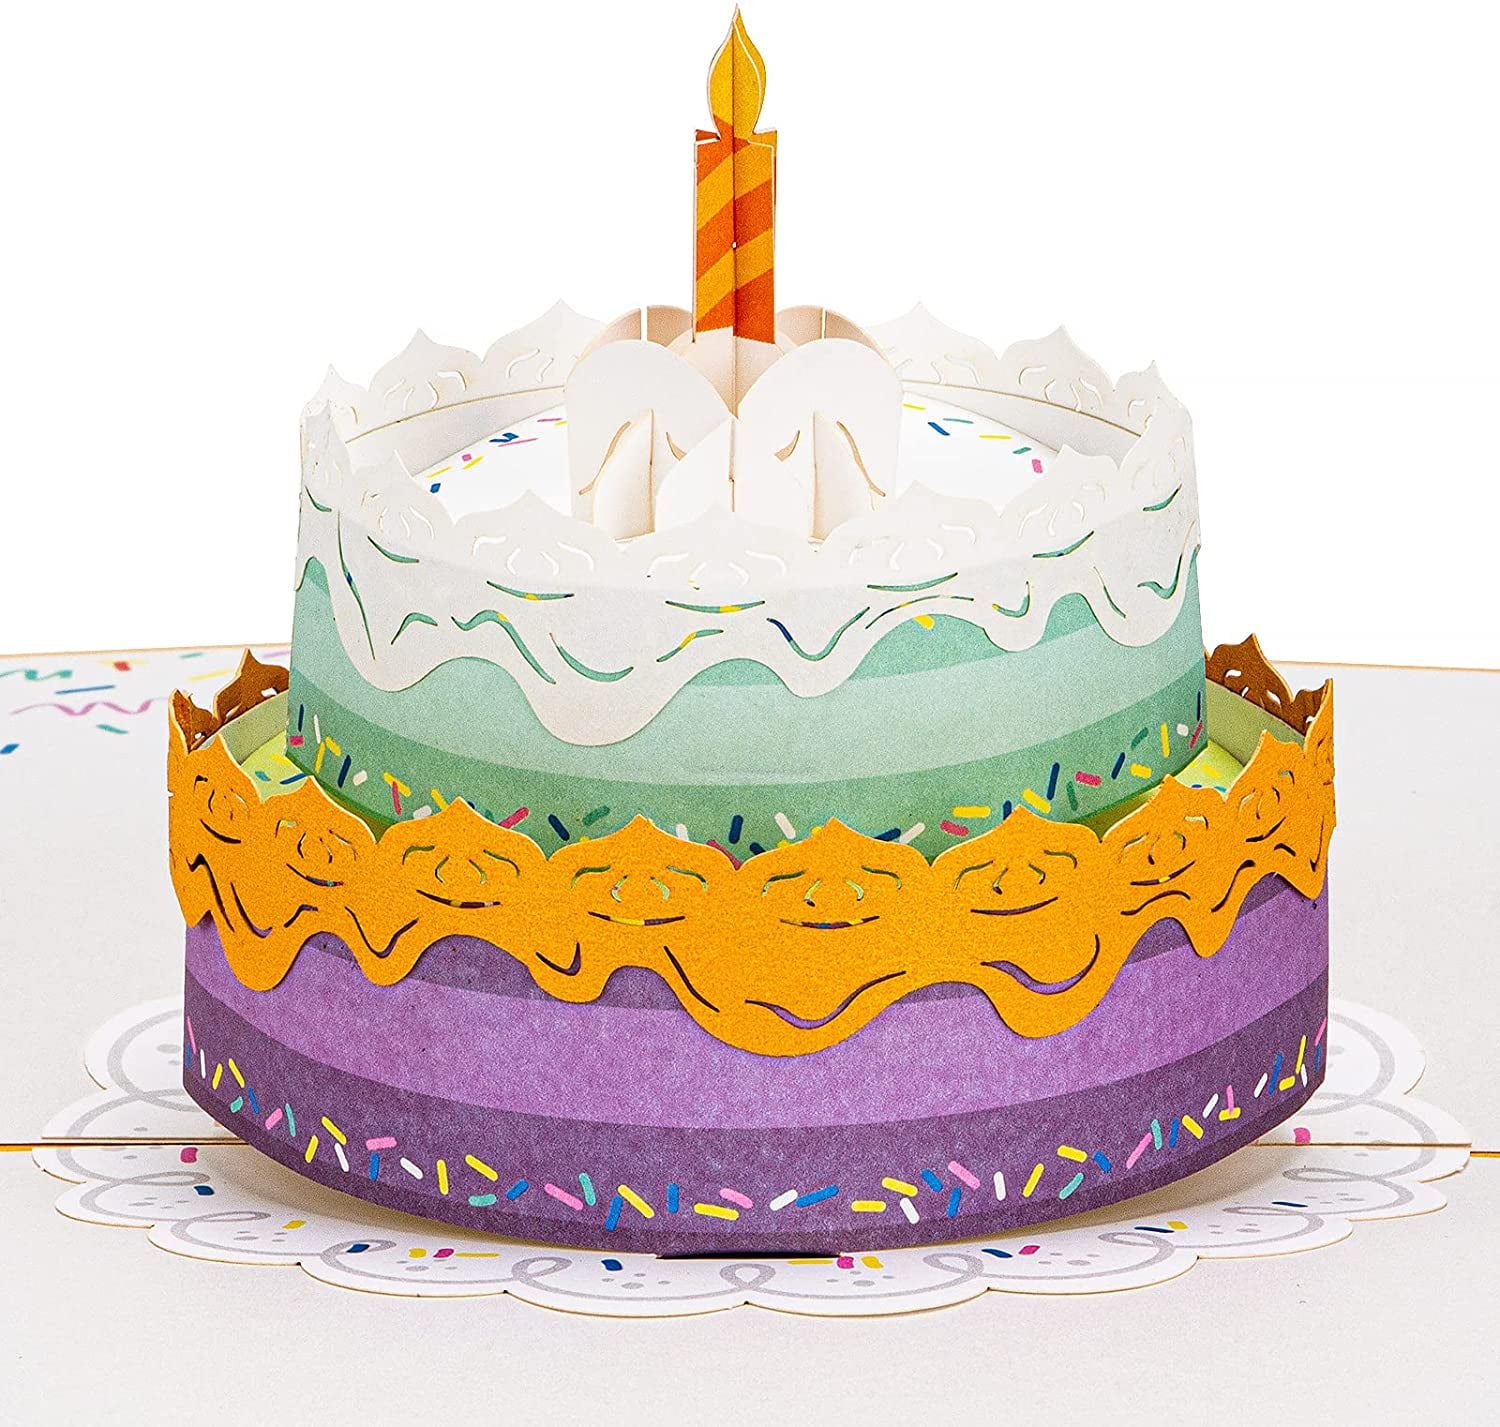 40+ Cute Simple Birthday Cake Ideas : Cute & Fun Birthday Cake